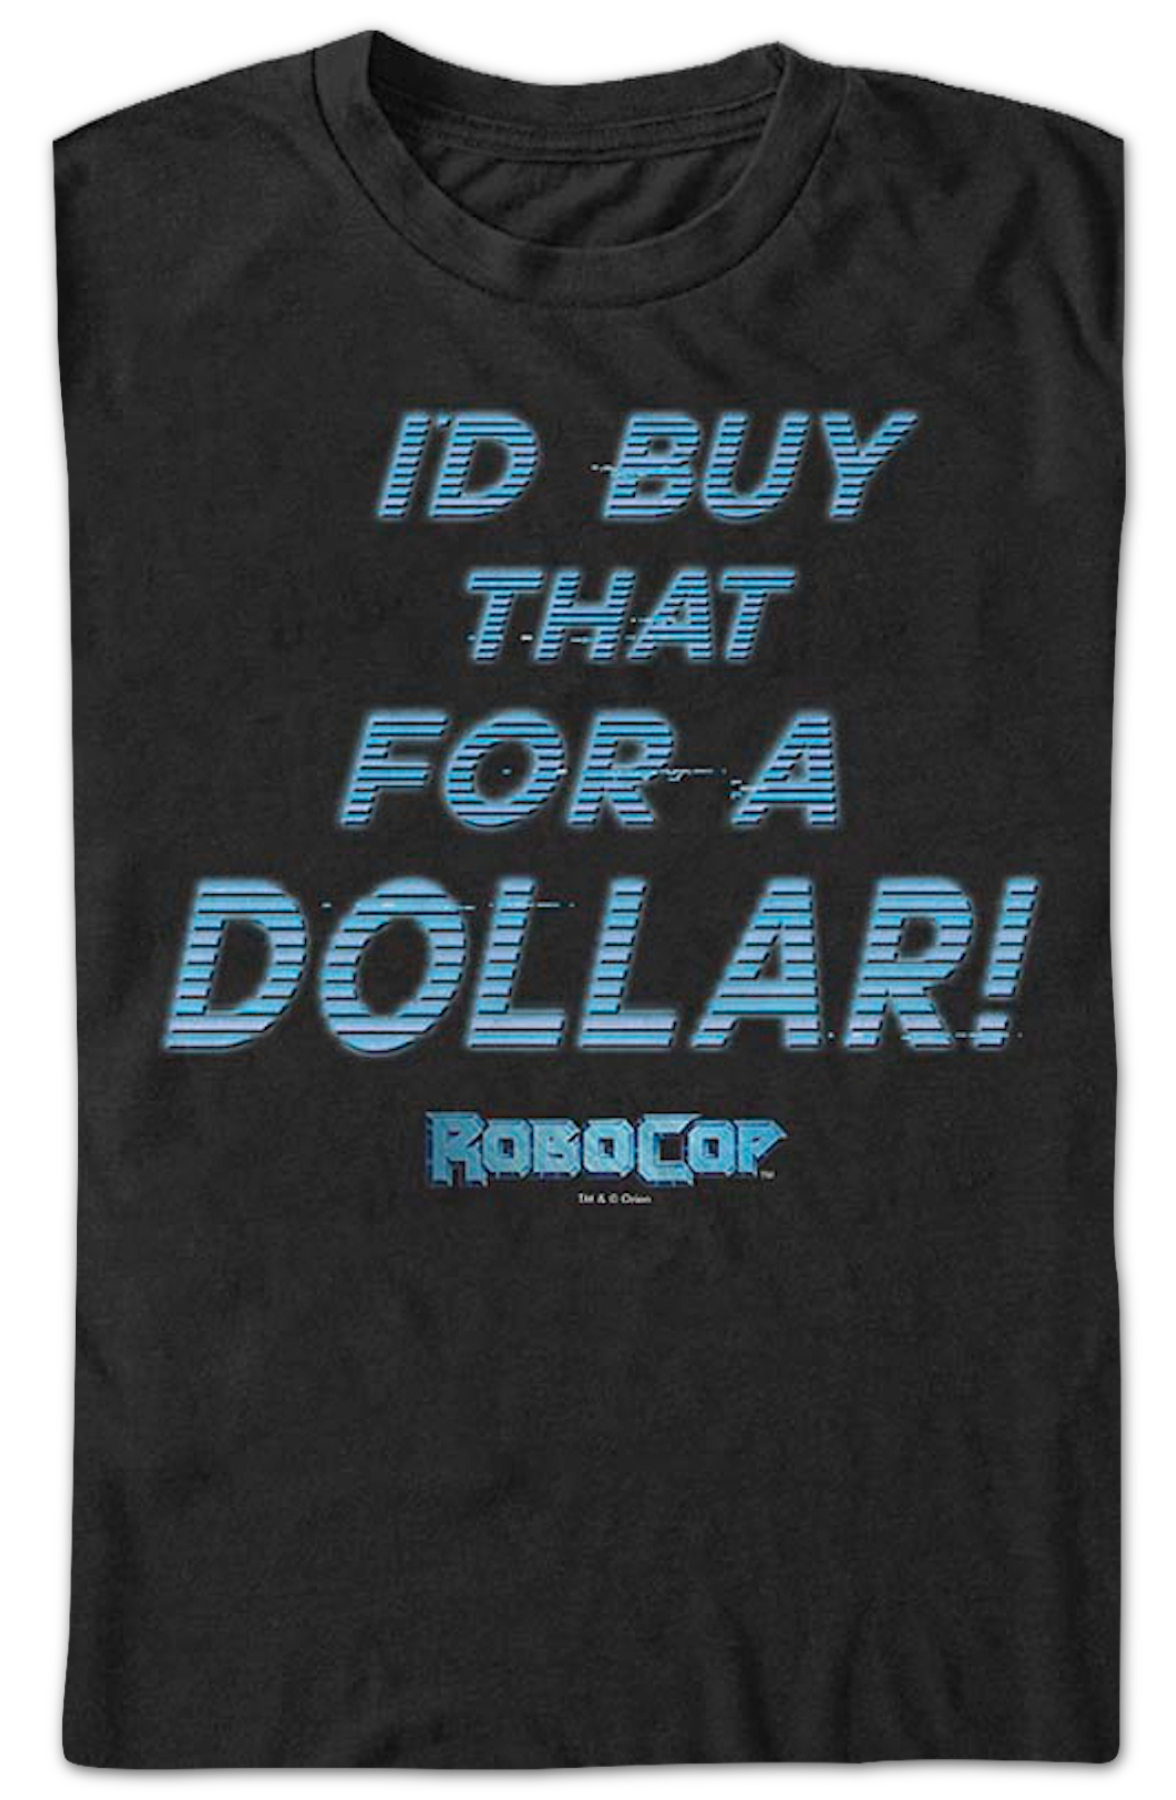 I'd Buy That For A Dollar RoboCop T-Shirt